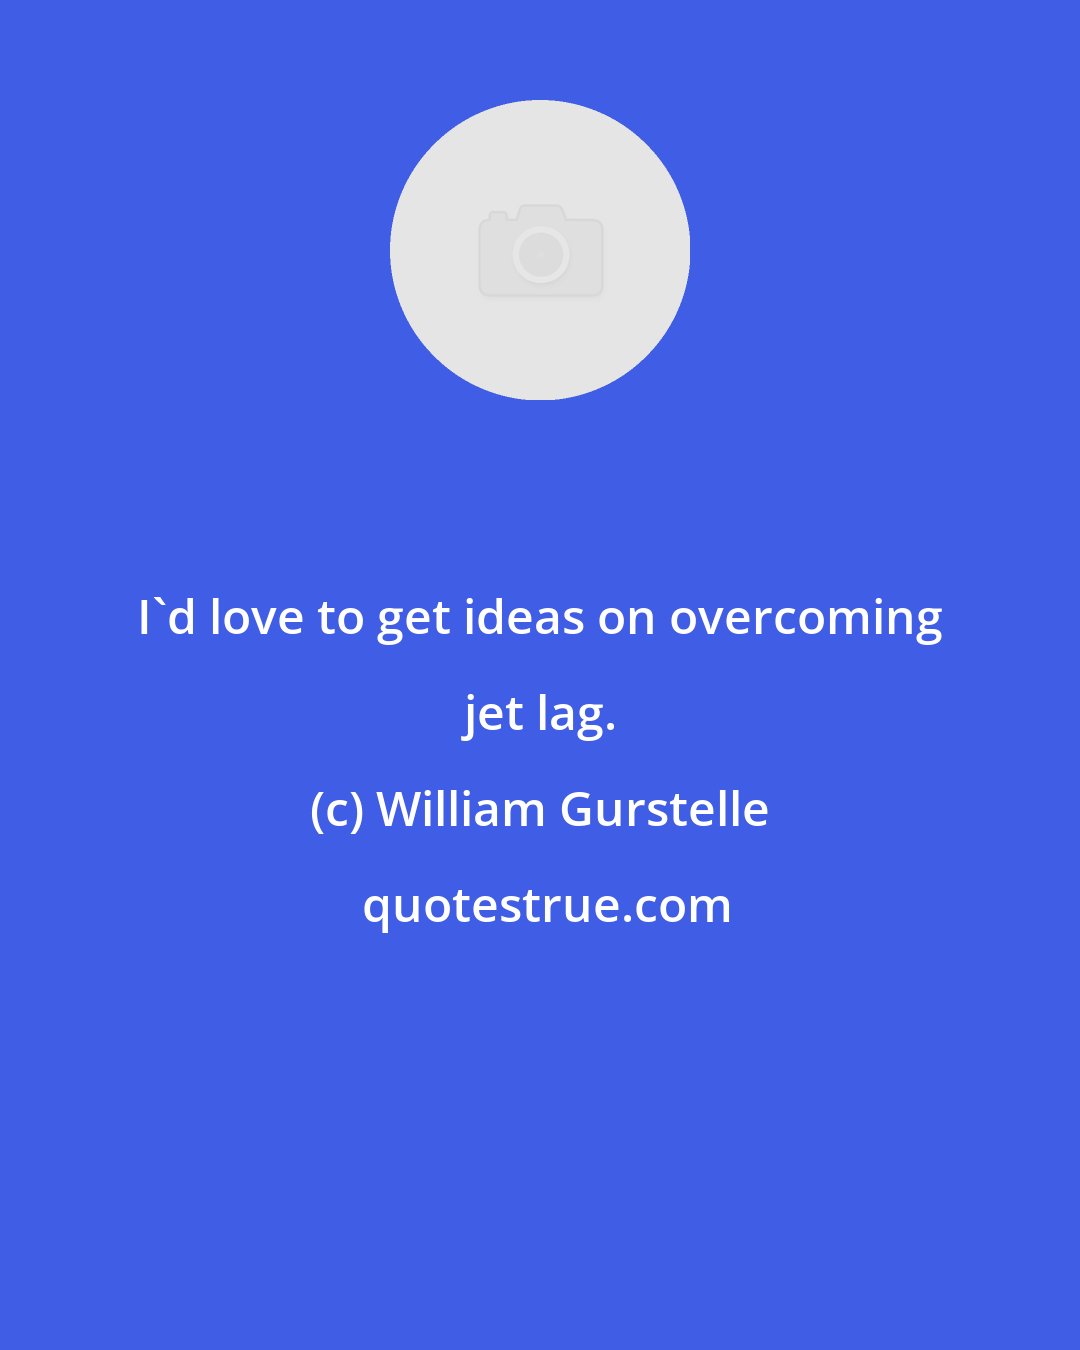 William Gurstelle: I'd love to get ideas on overcoming jet lag.